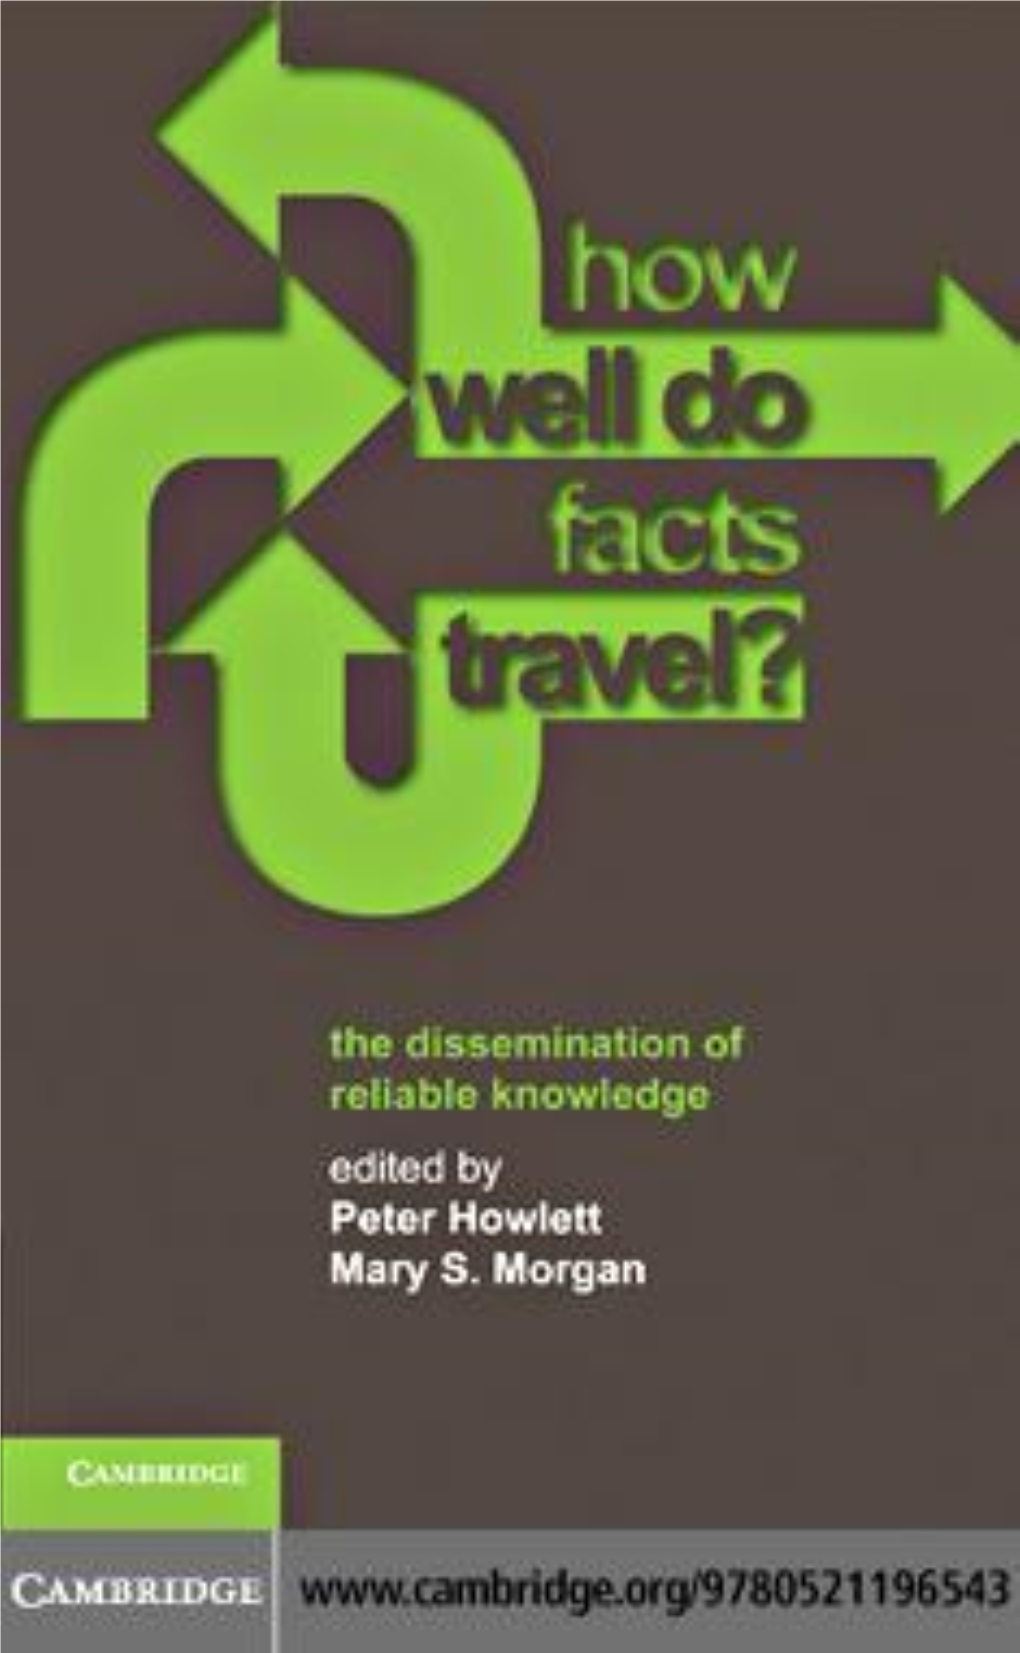 Cambridge.University.Press-How.Well.Do.Facts.Travel.2010.Retail.Ebook.Pdf